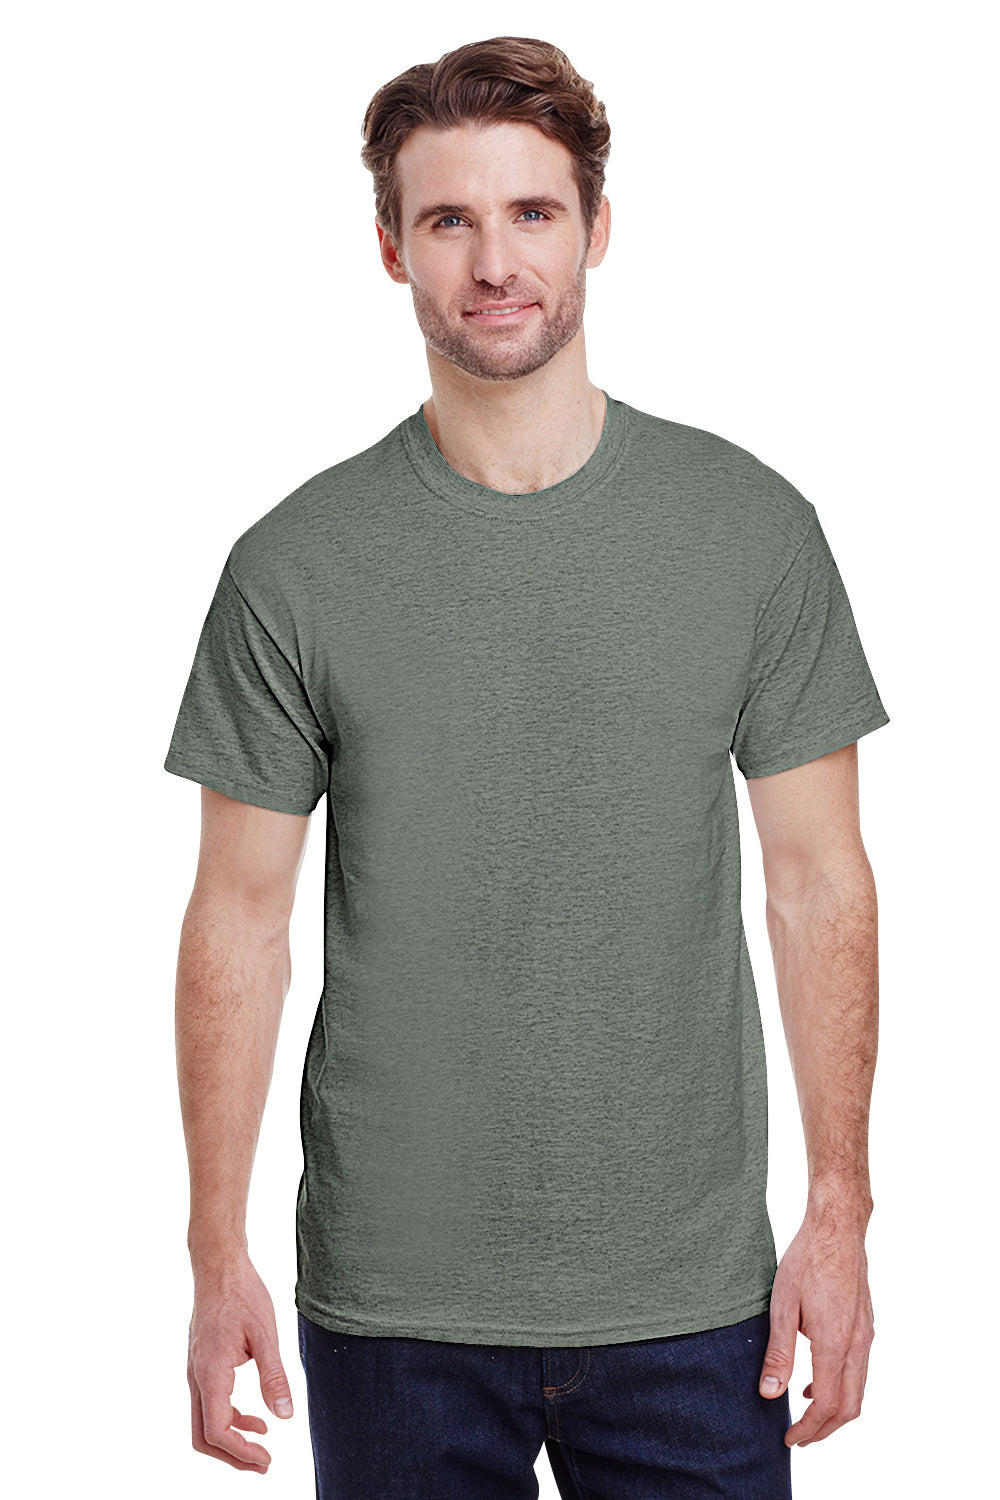 Gildan G500 Mens Short Sleeve Crewneck T-Shirt Heather Military Green Front